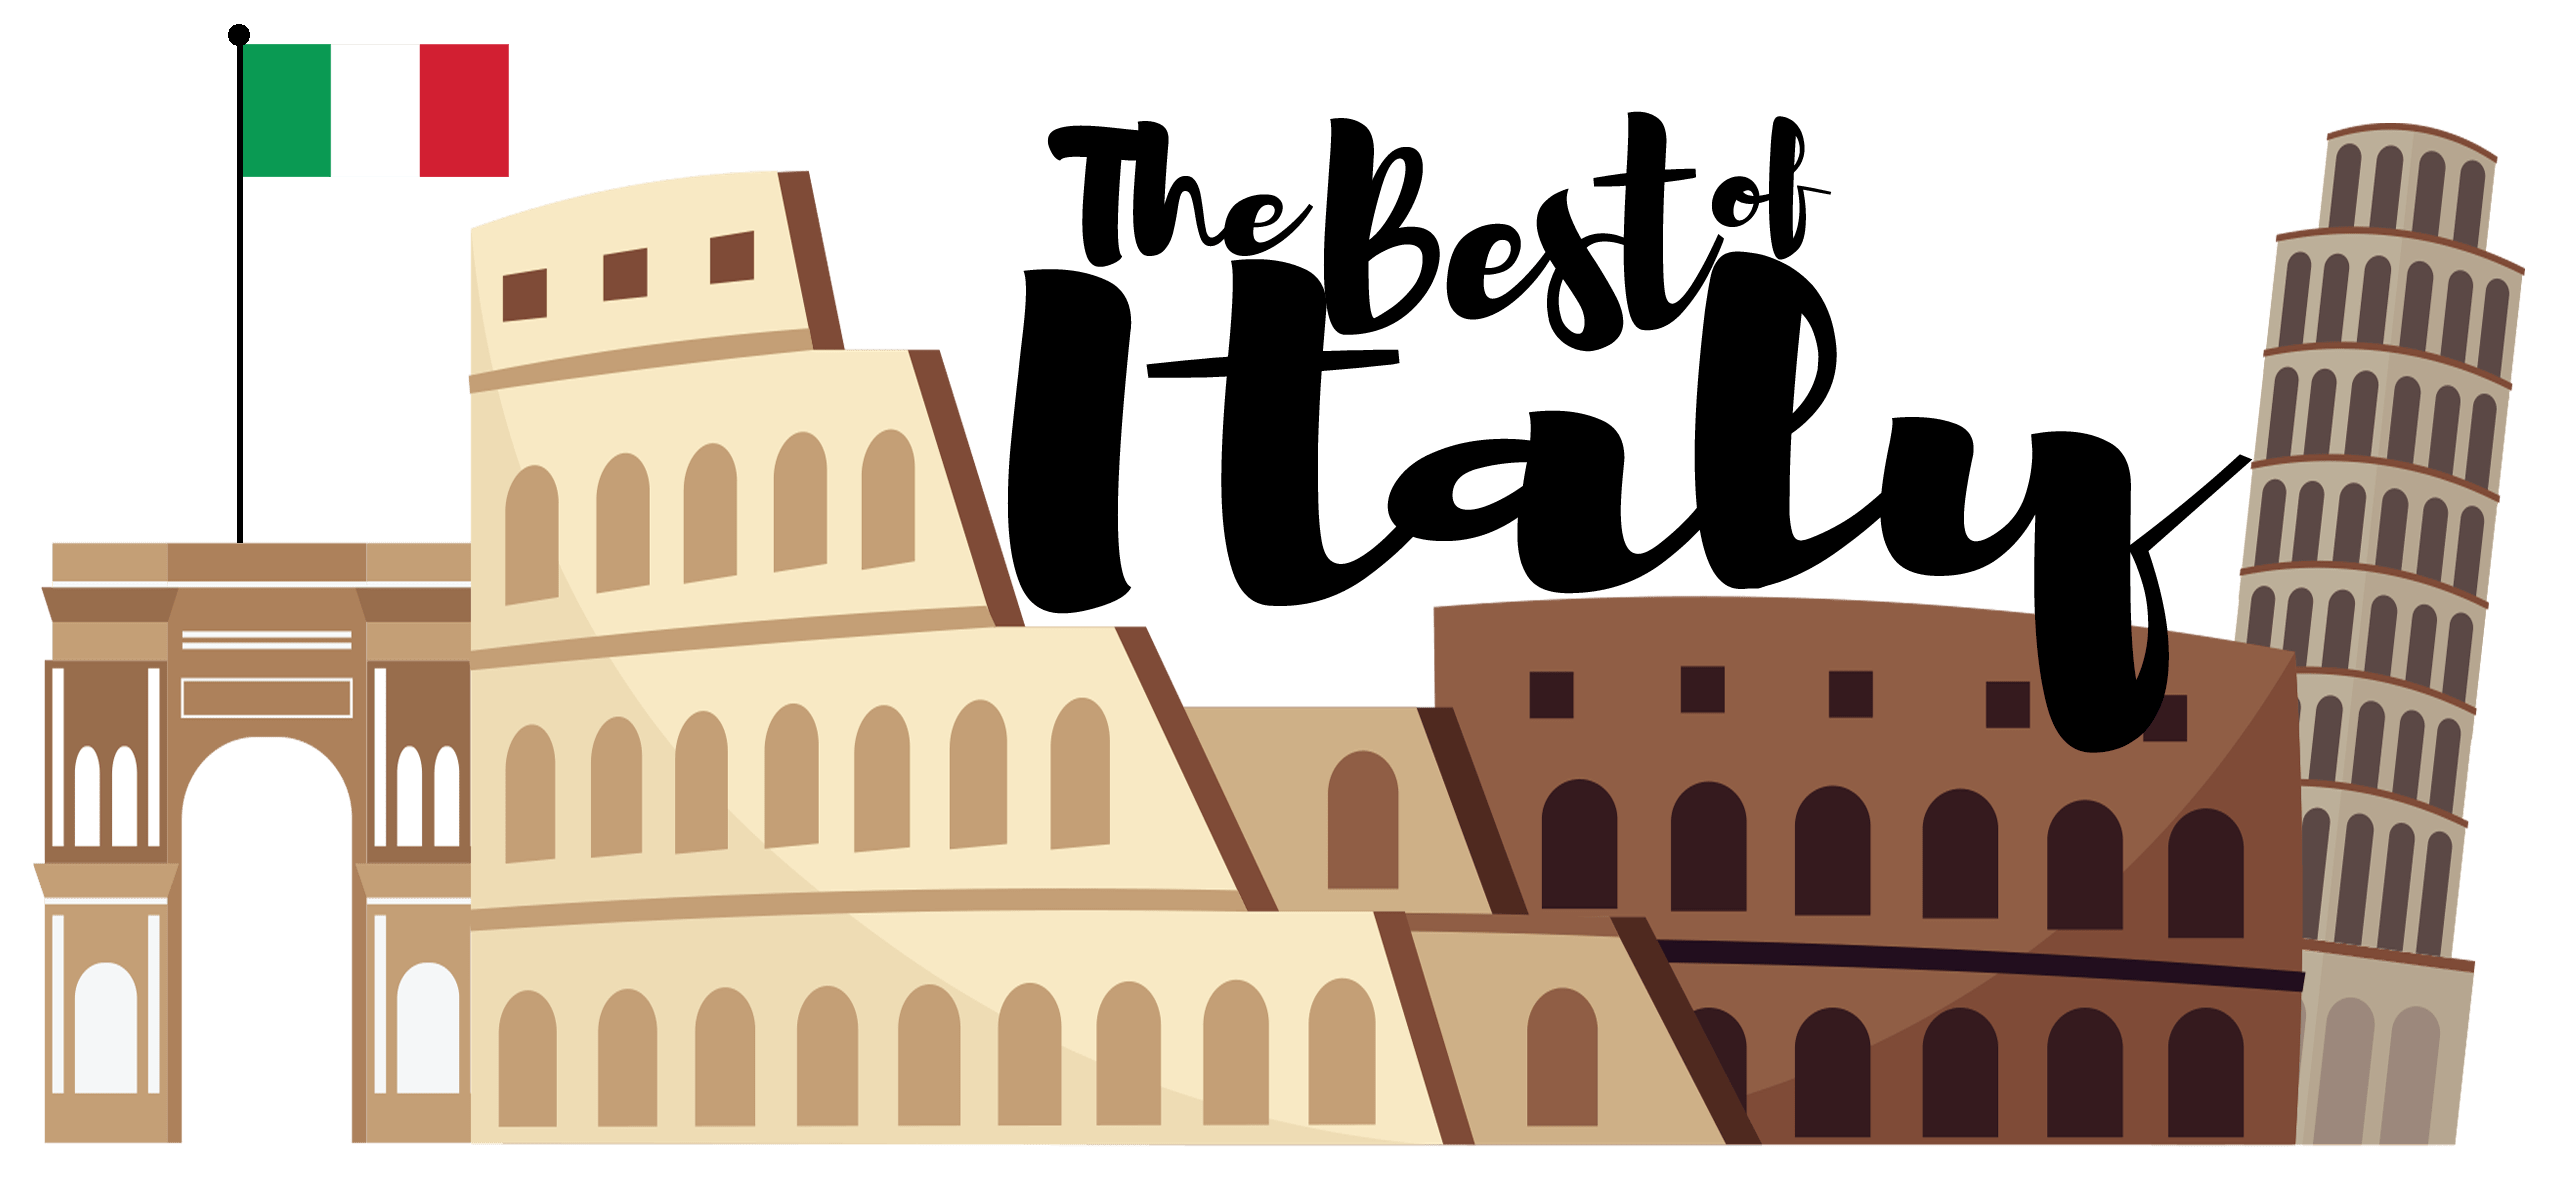 Rome clipart symbol italian. The best of italy